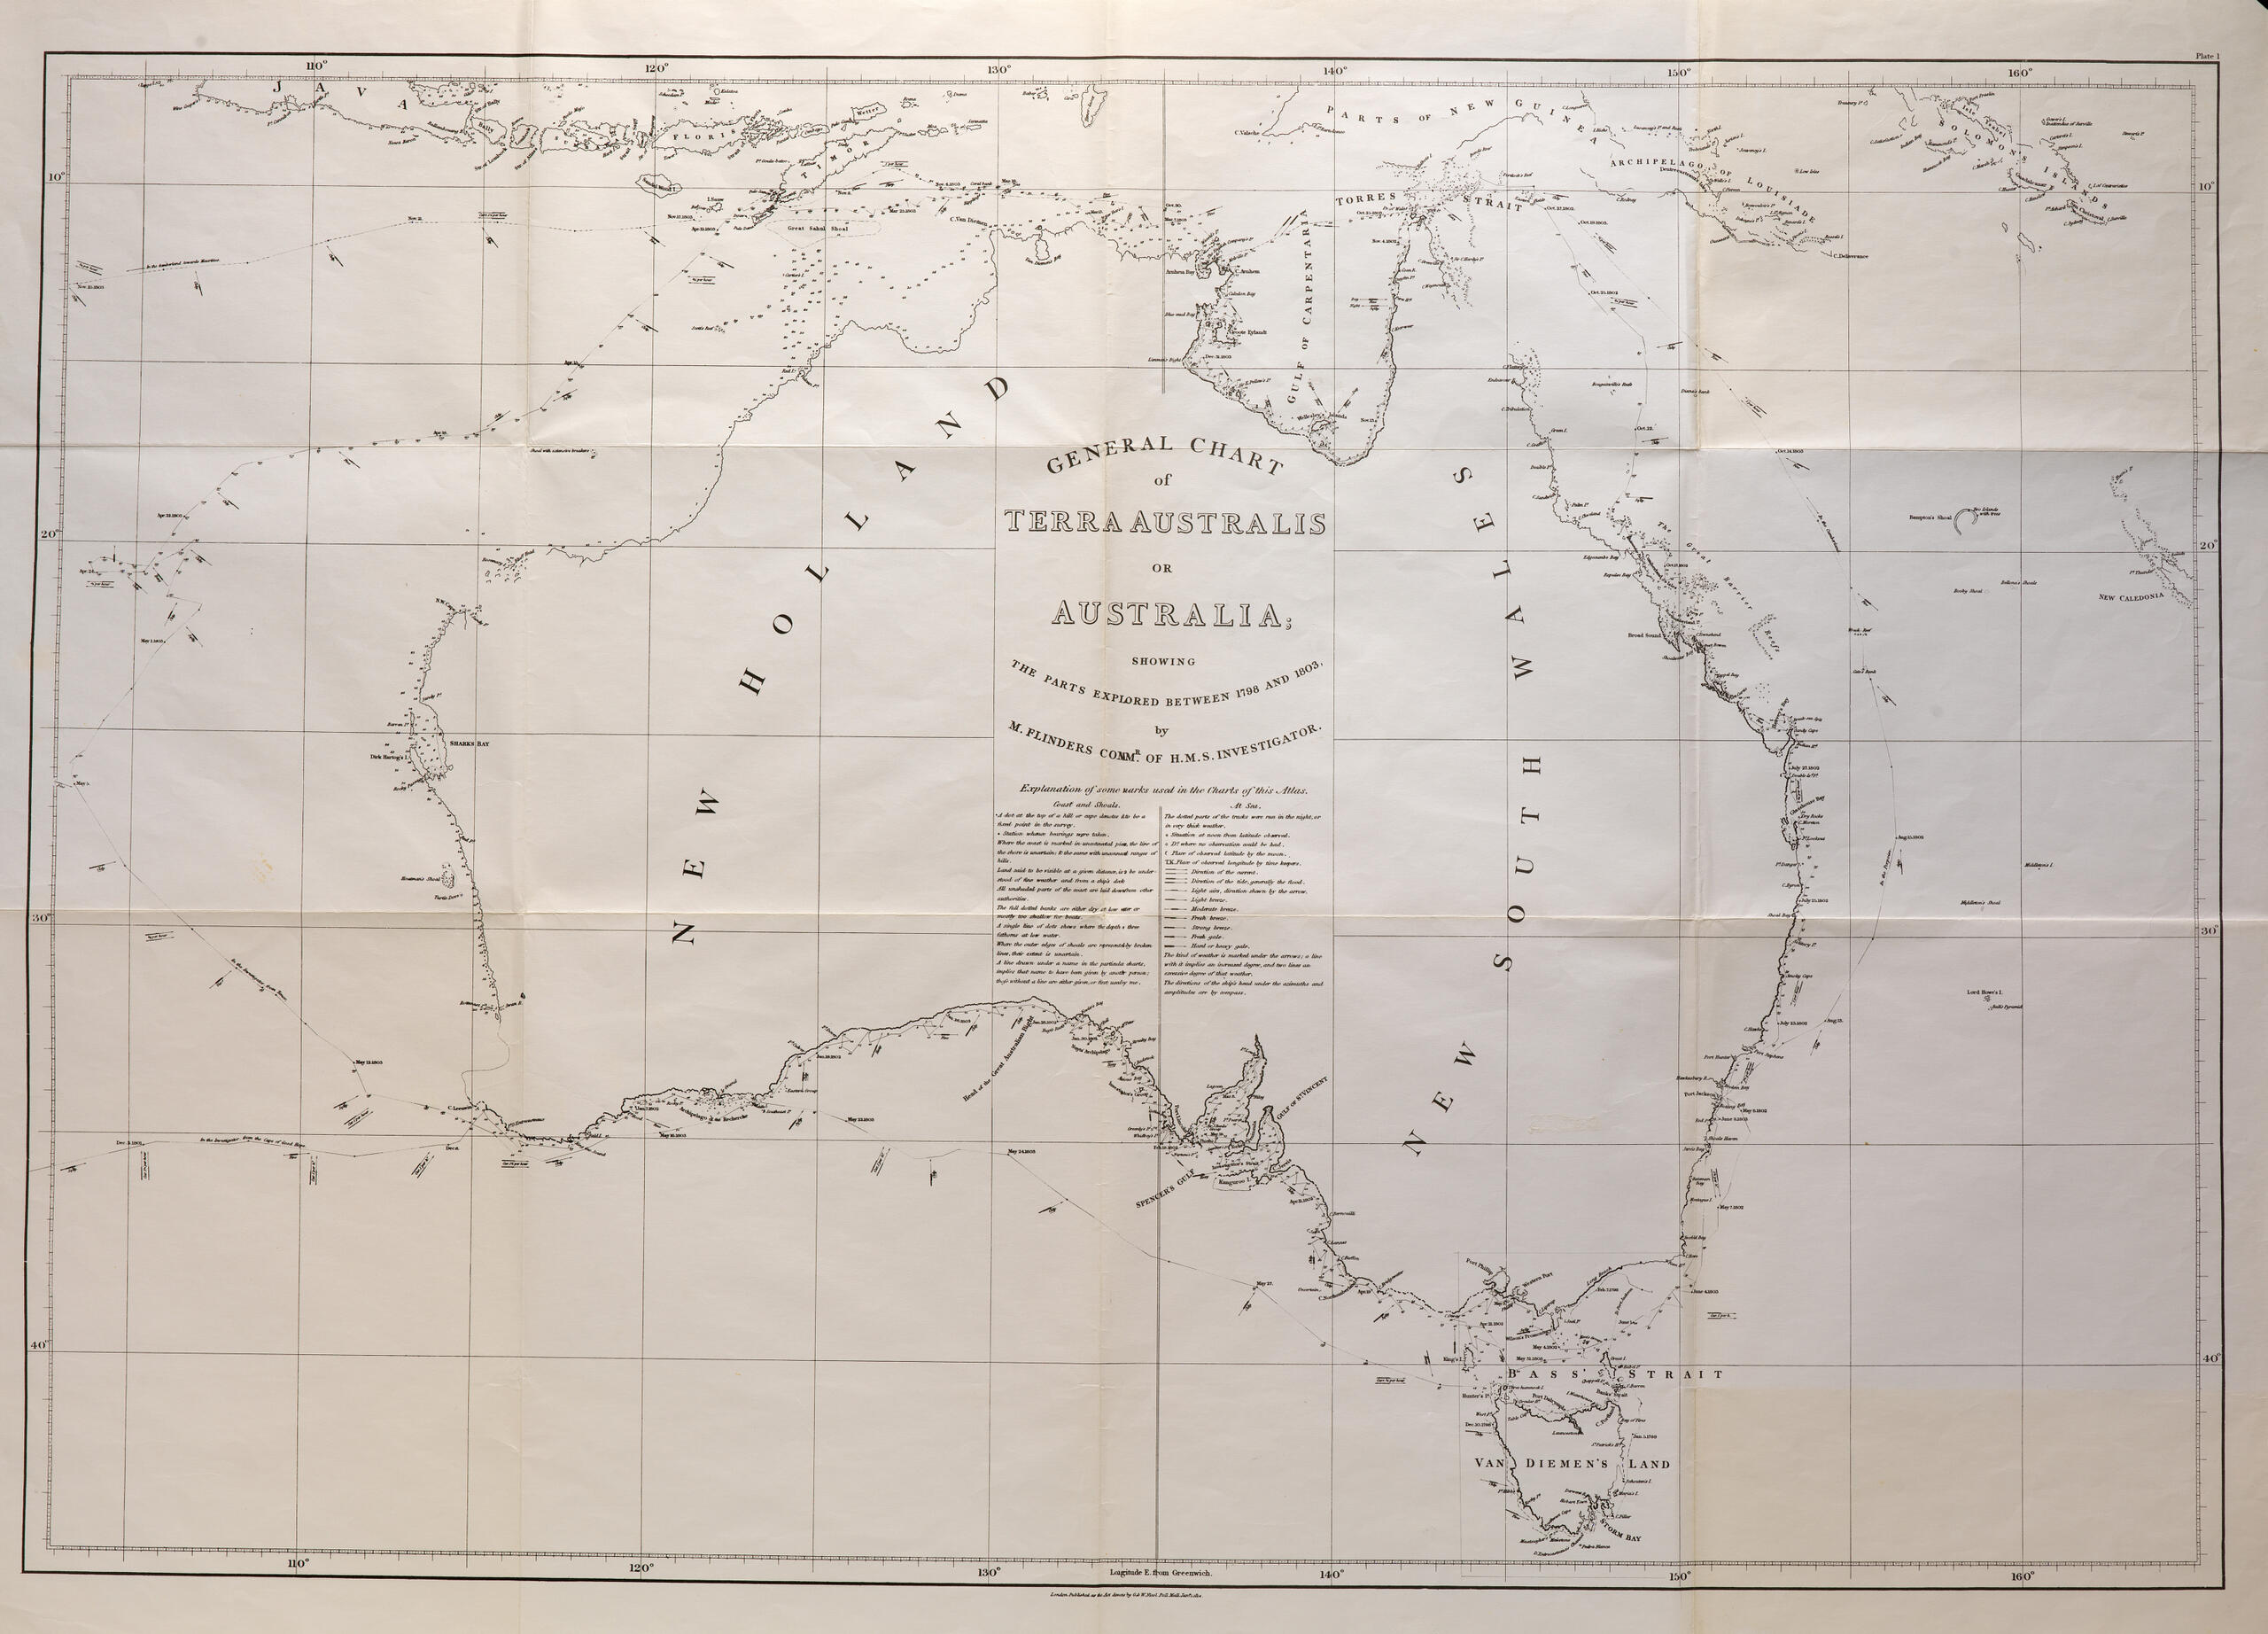 Map showing the Australian coastline, printed in black ink on cream paper.  